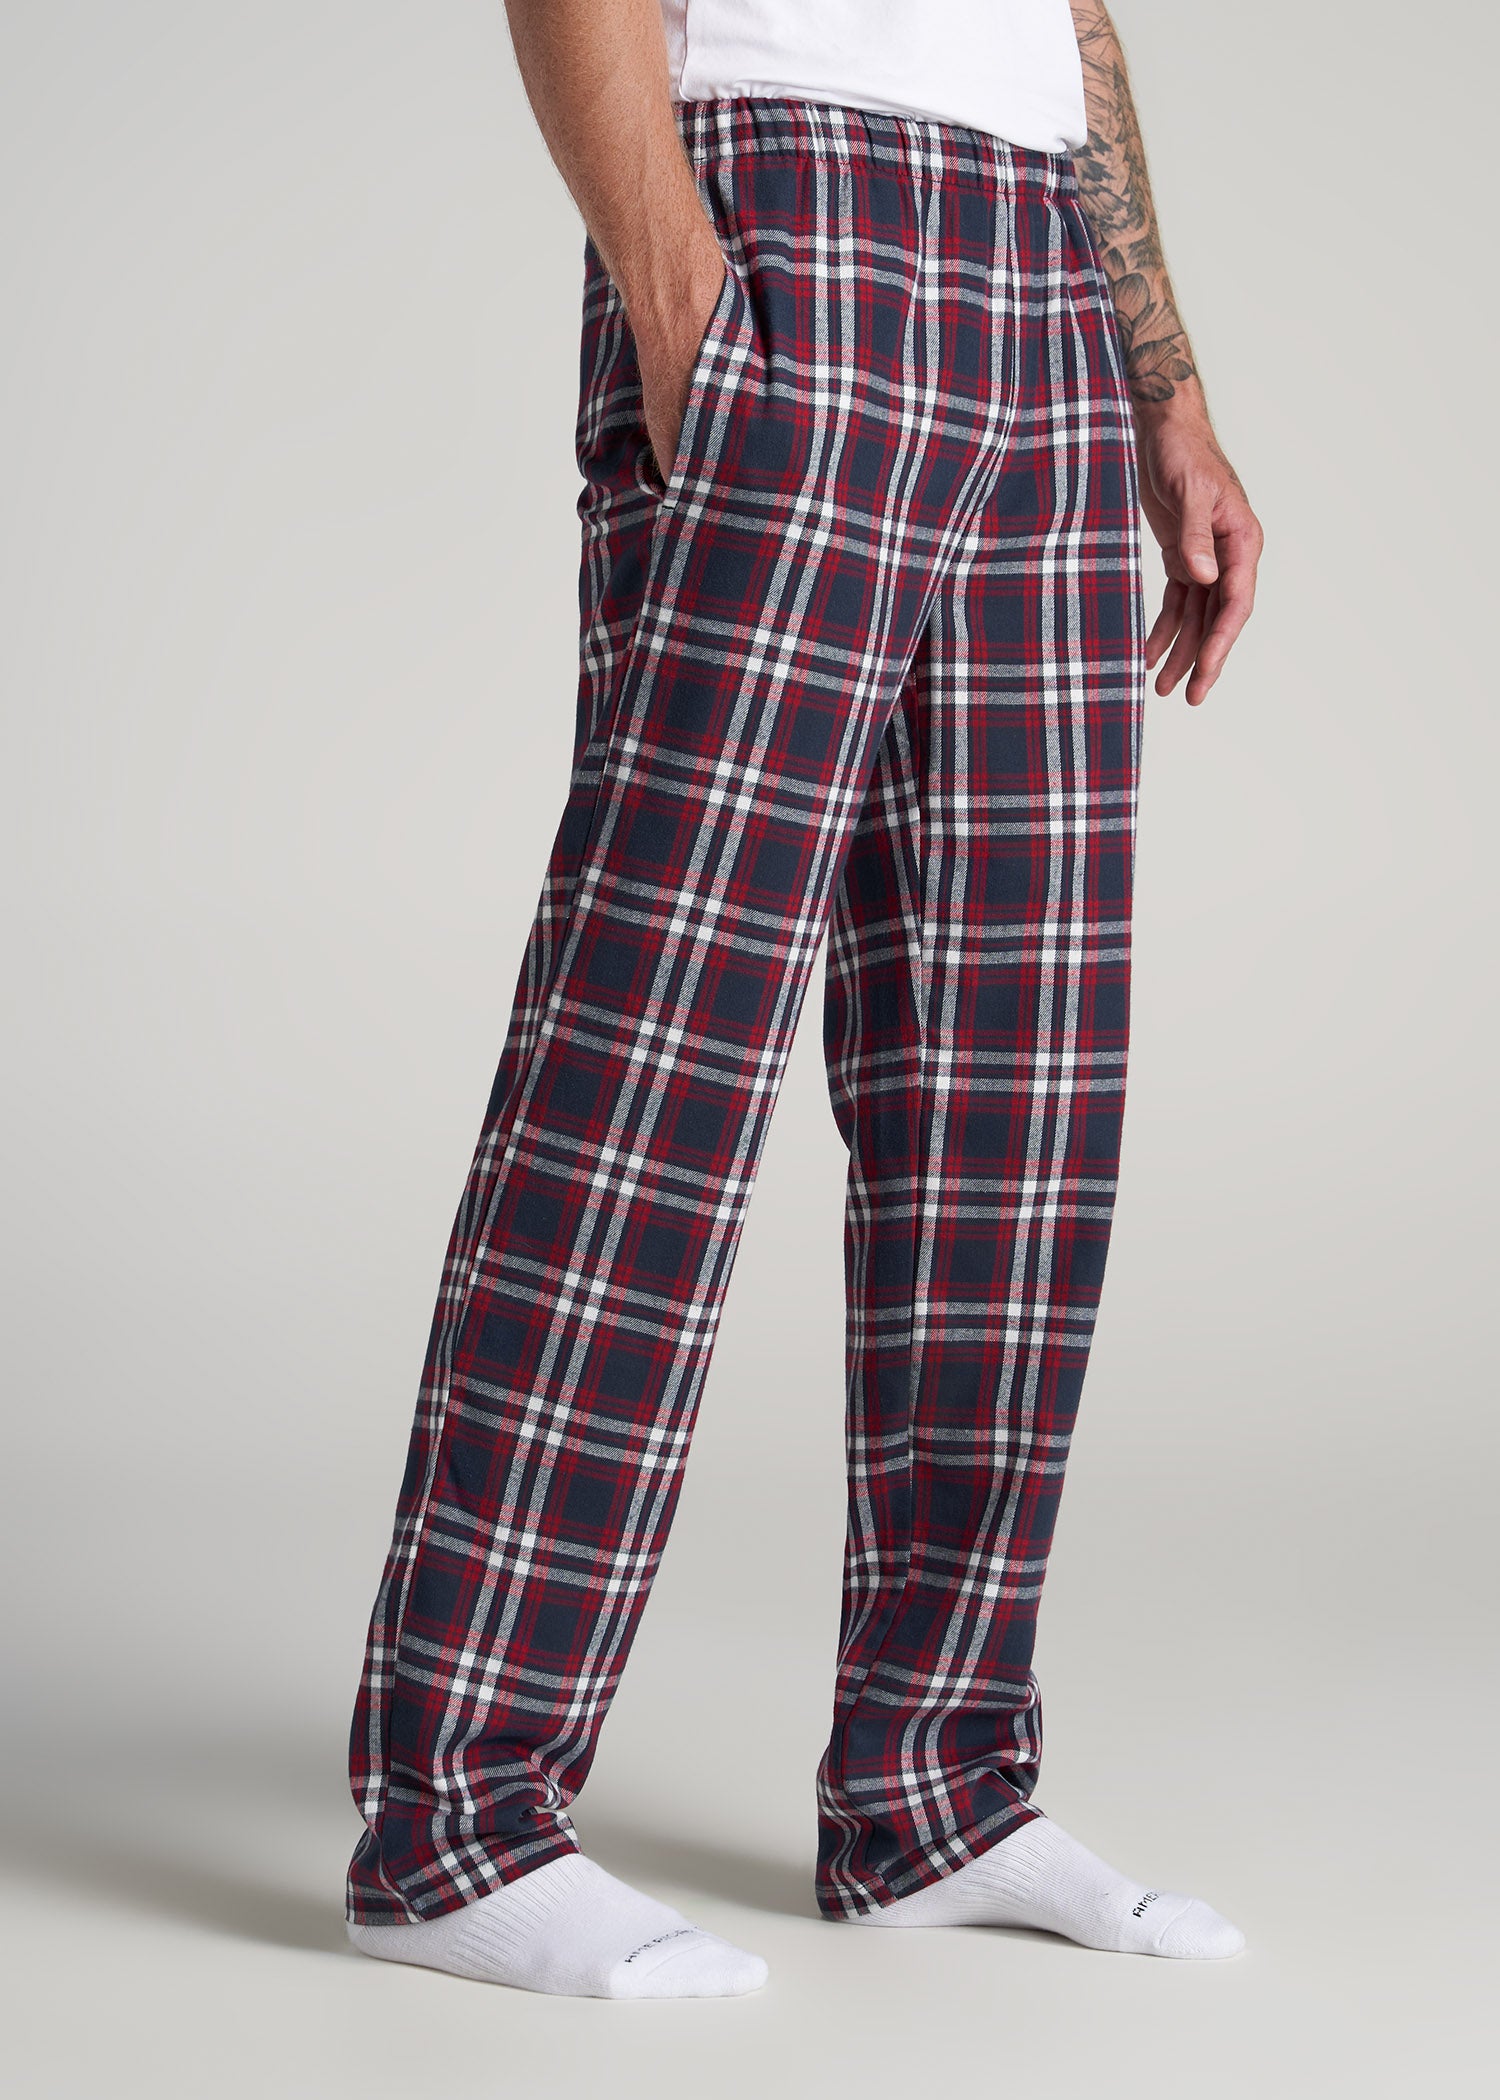 Plaid Flannel Pajama Pants | Sleepwear | Underwear & Nightwear